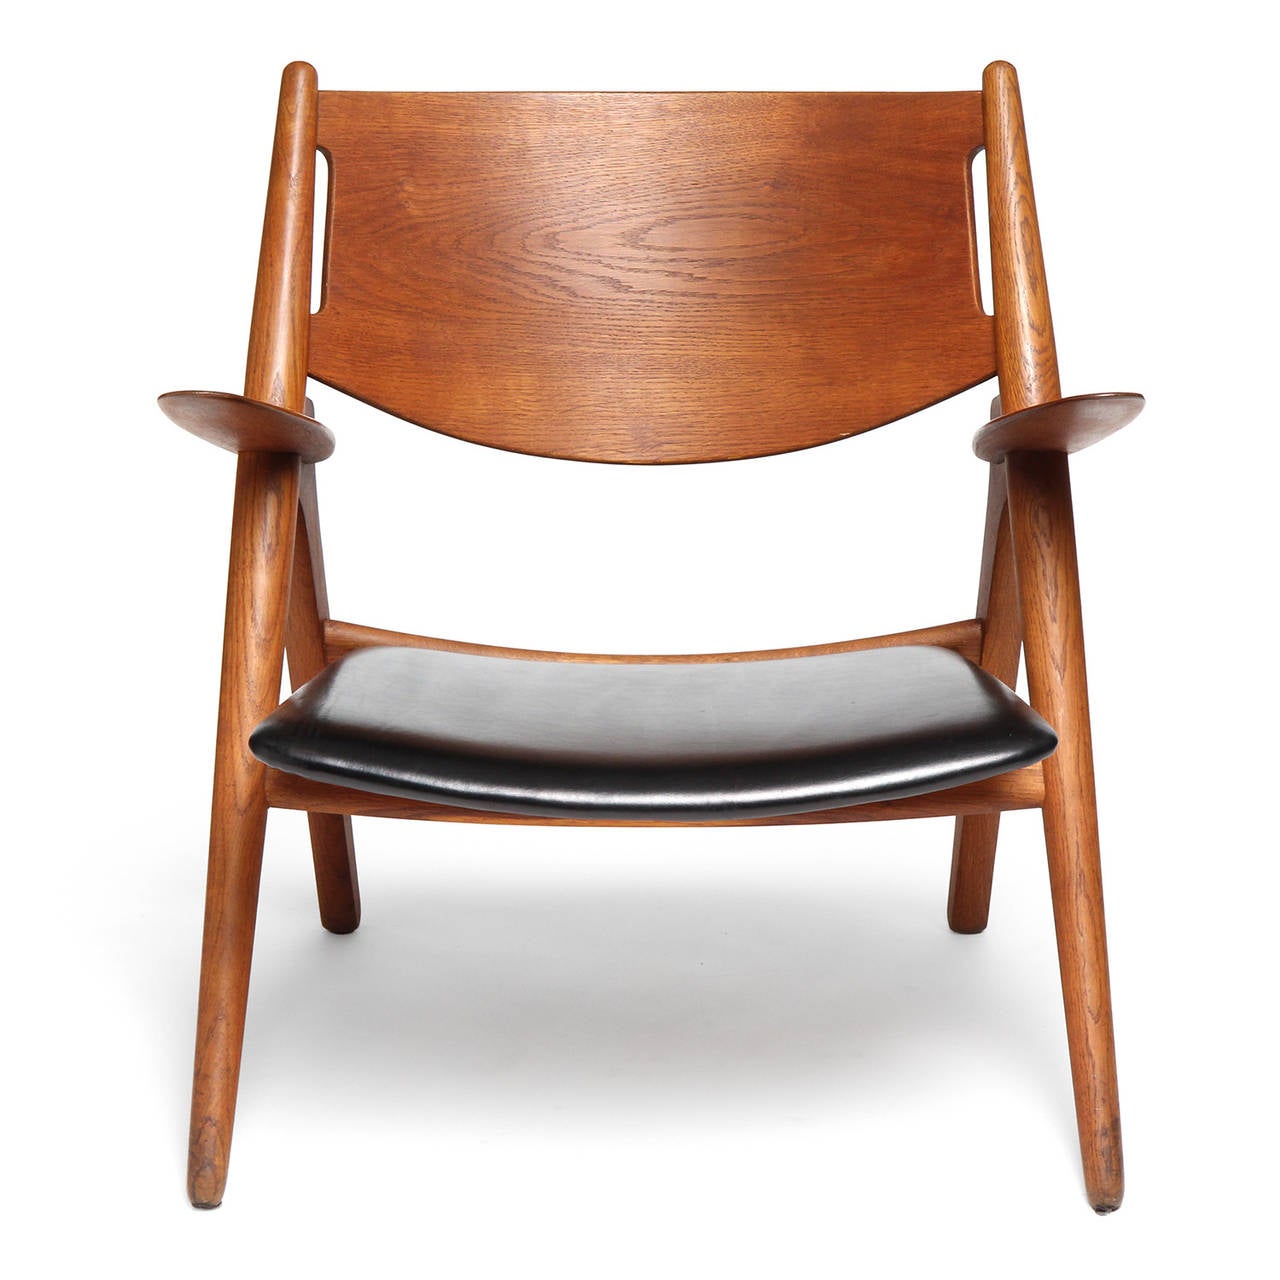 Sawbuck Lounge Chair by Hans J. Wegner For Sale at 1stdibs